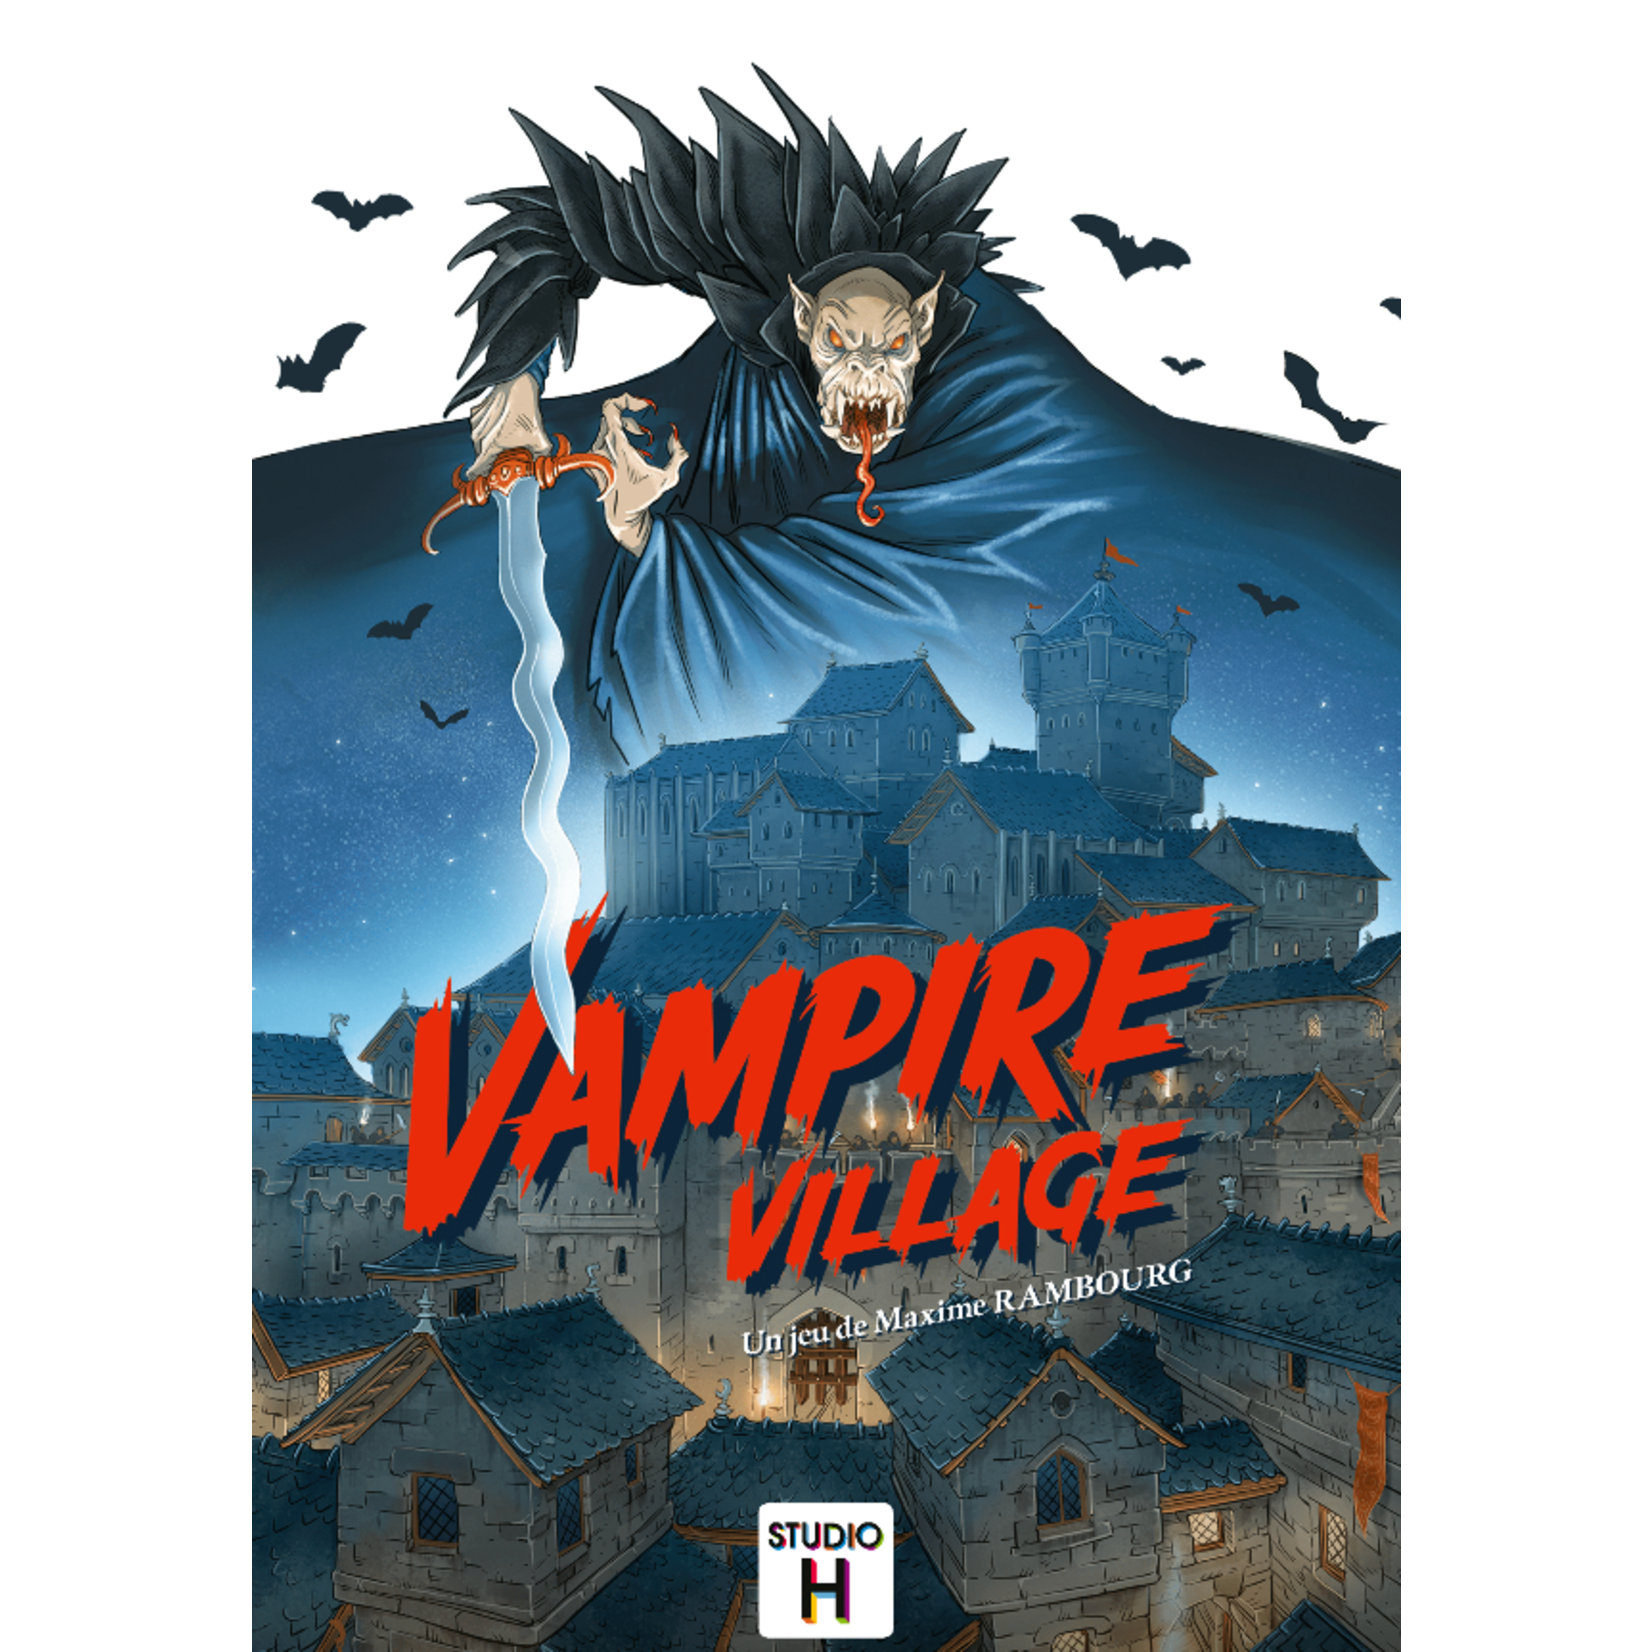 Studio H Vampire Village